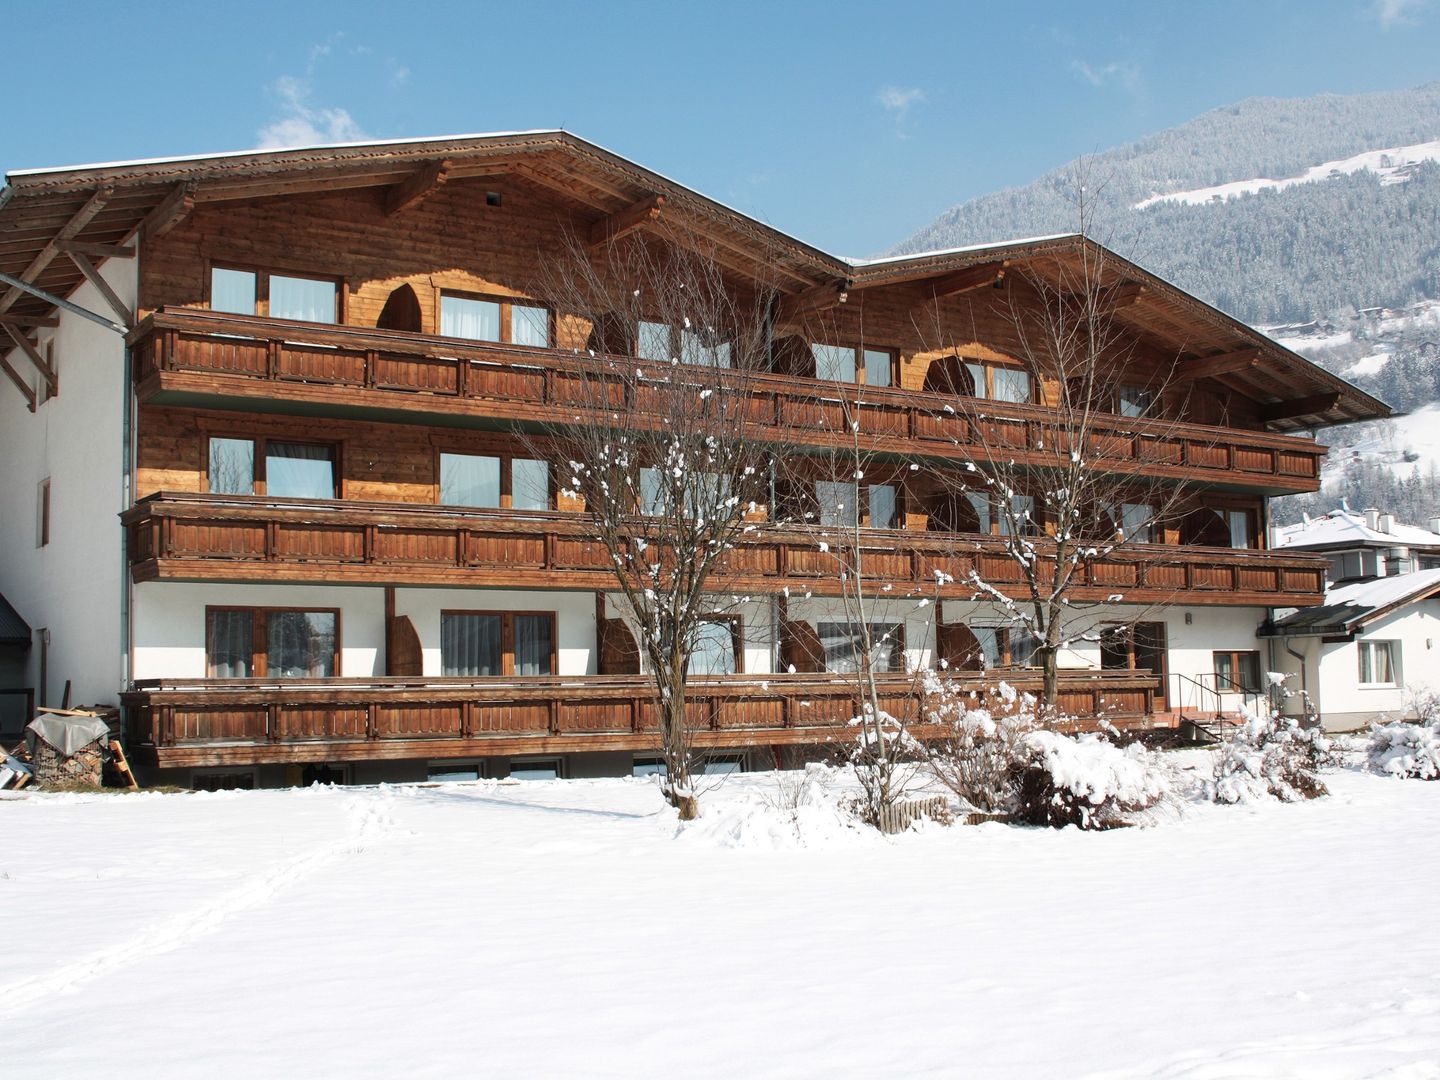 first mountain Hotel Zillertal in Kaltenbach - Ried - Stumm, first mountain Hotel Zillertal / Österreich